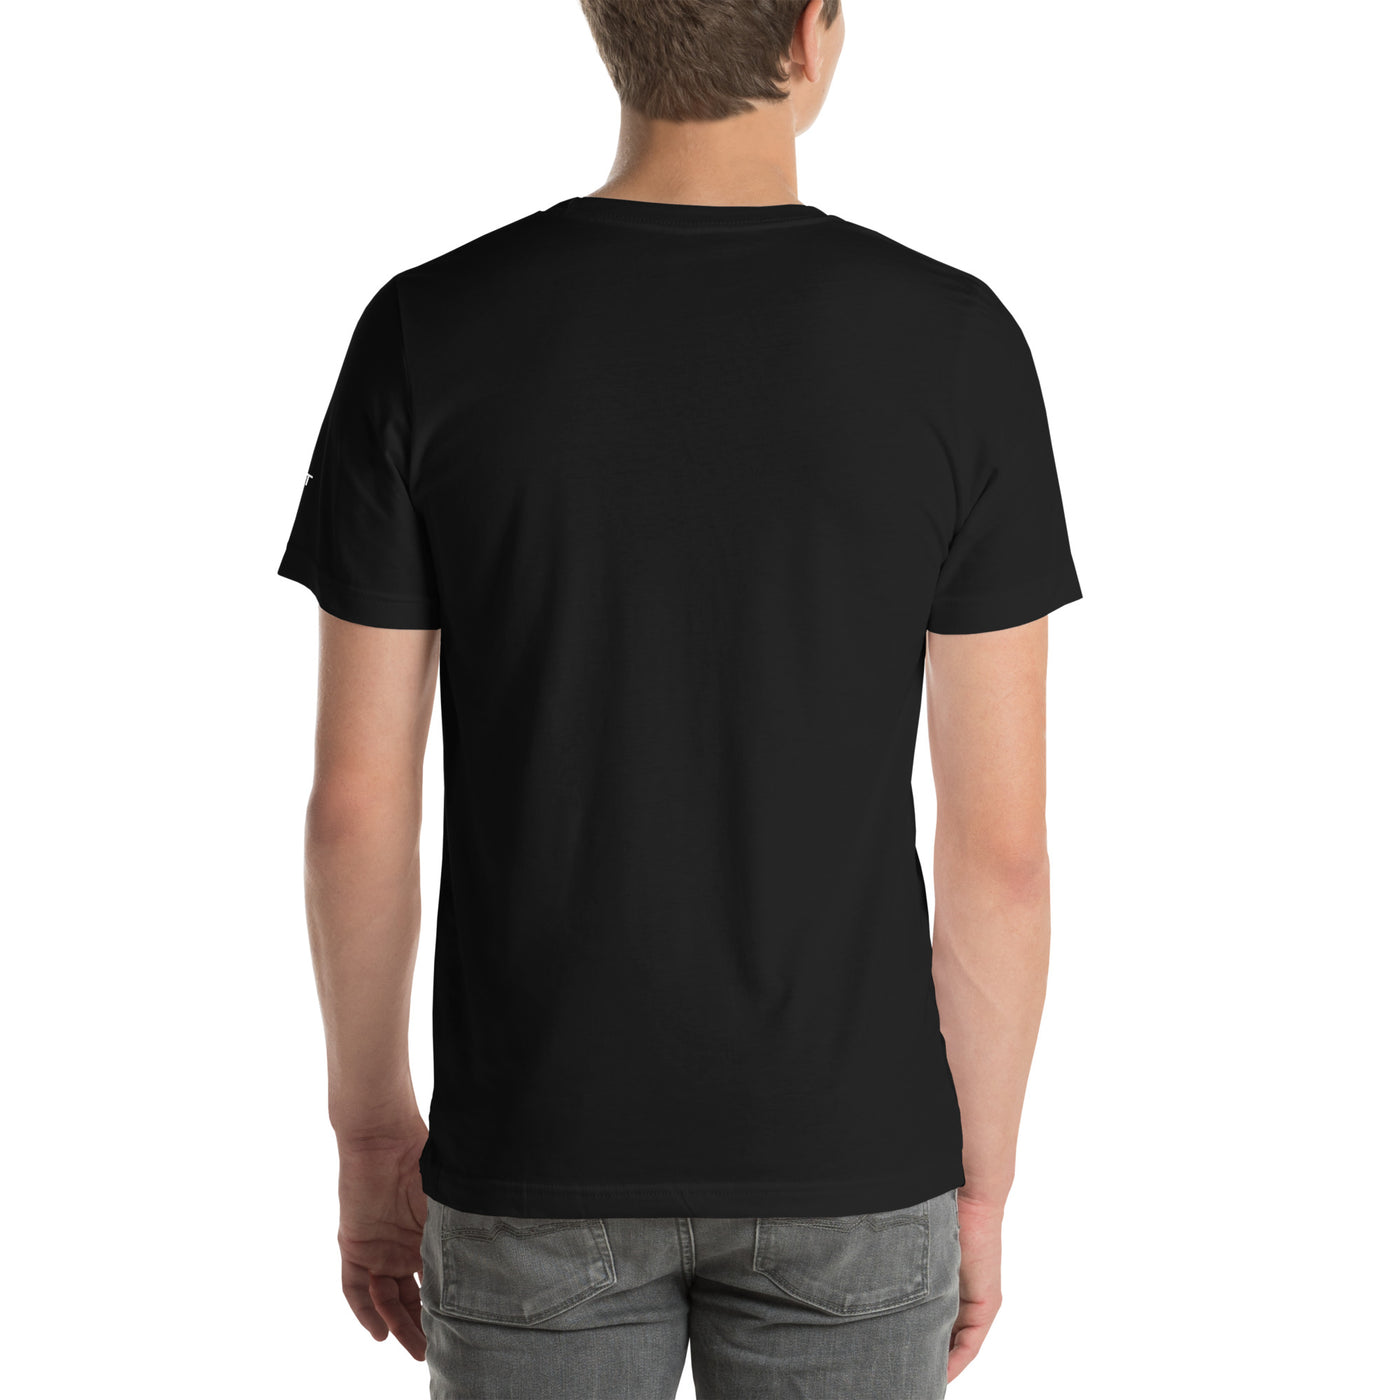 Crypto Club V1 - Unisex t-shirt